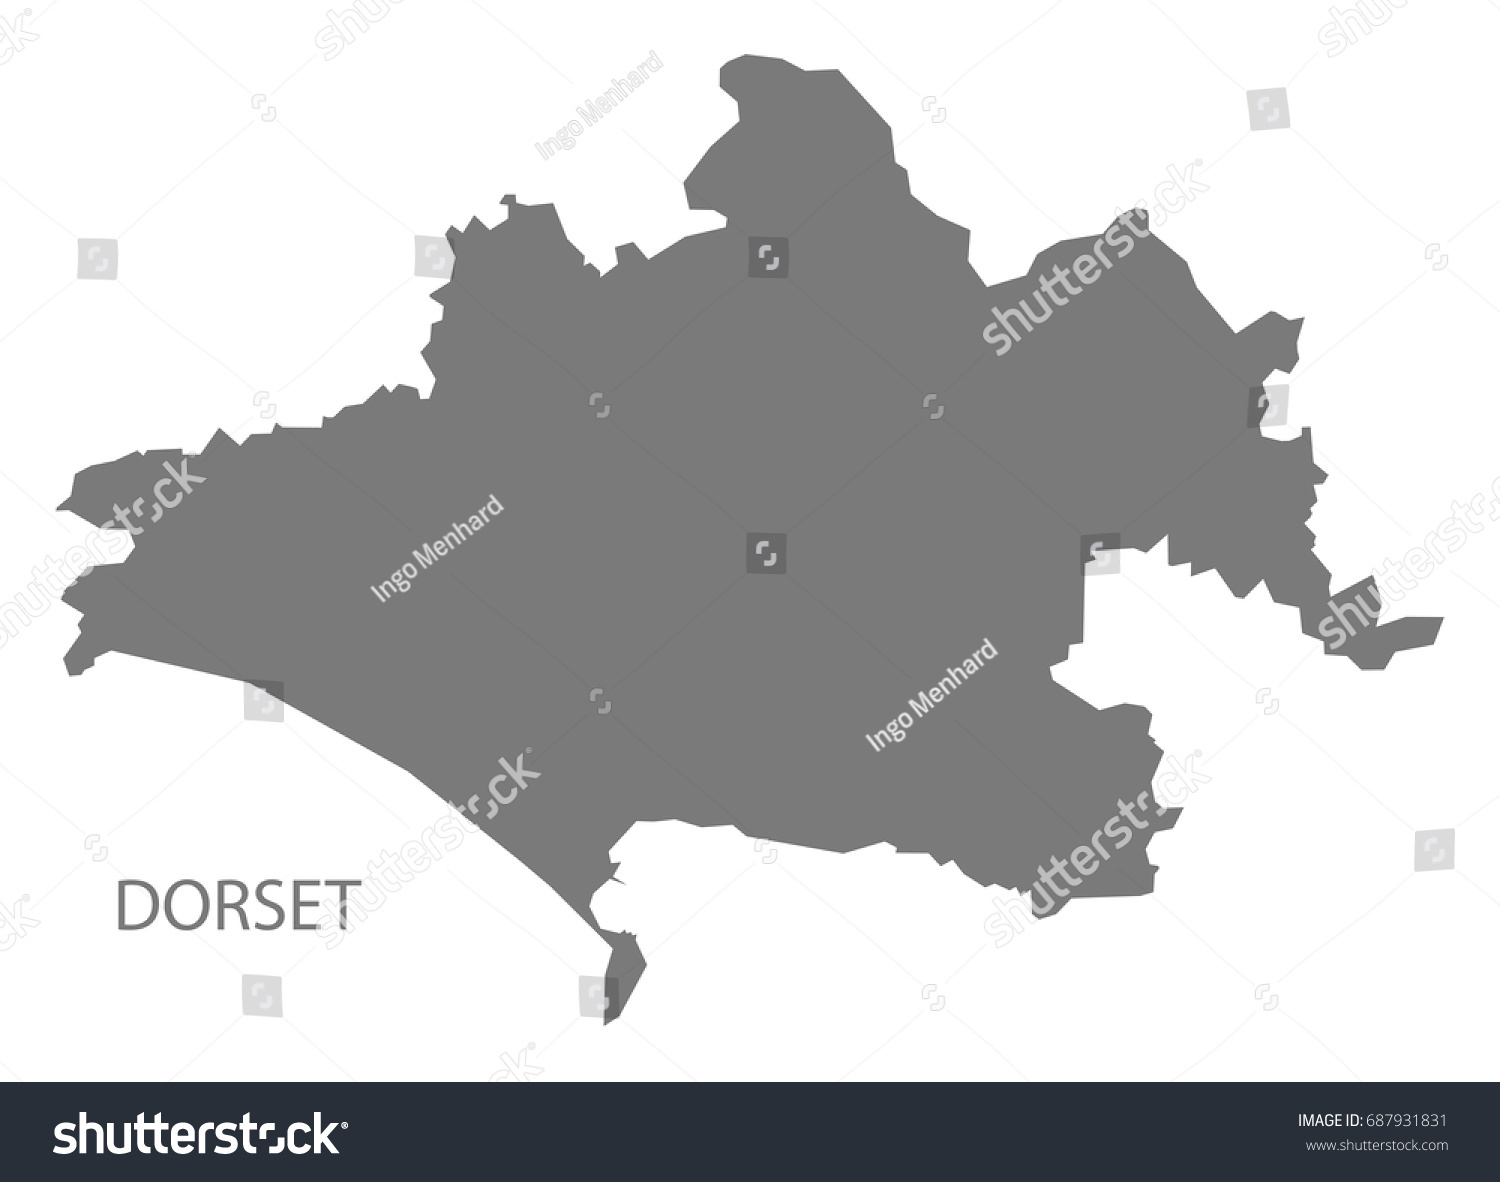 Dorset county map England UK grey illustration - Royalty Free Stock ...